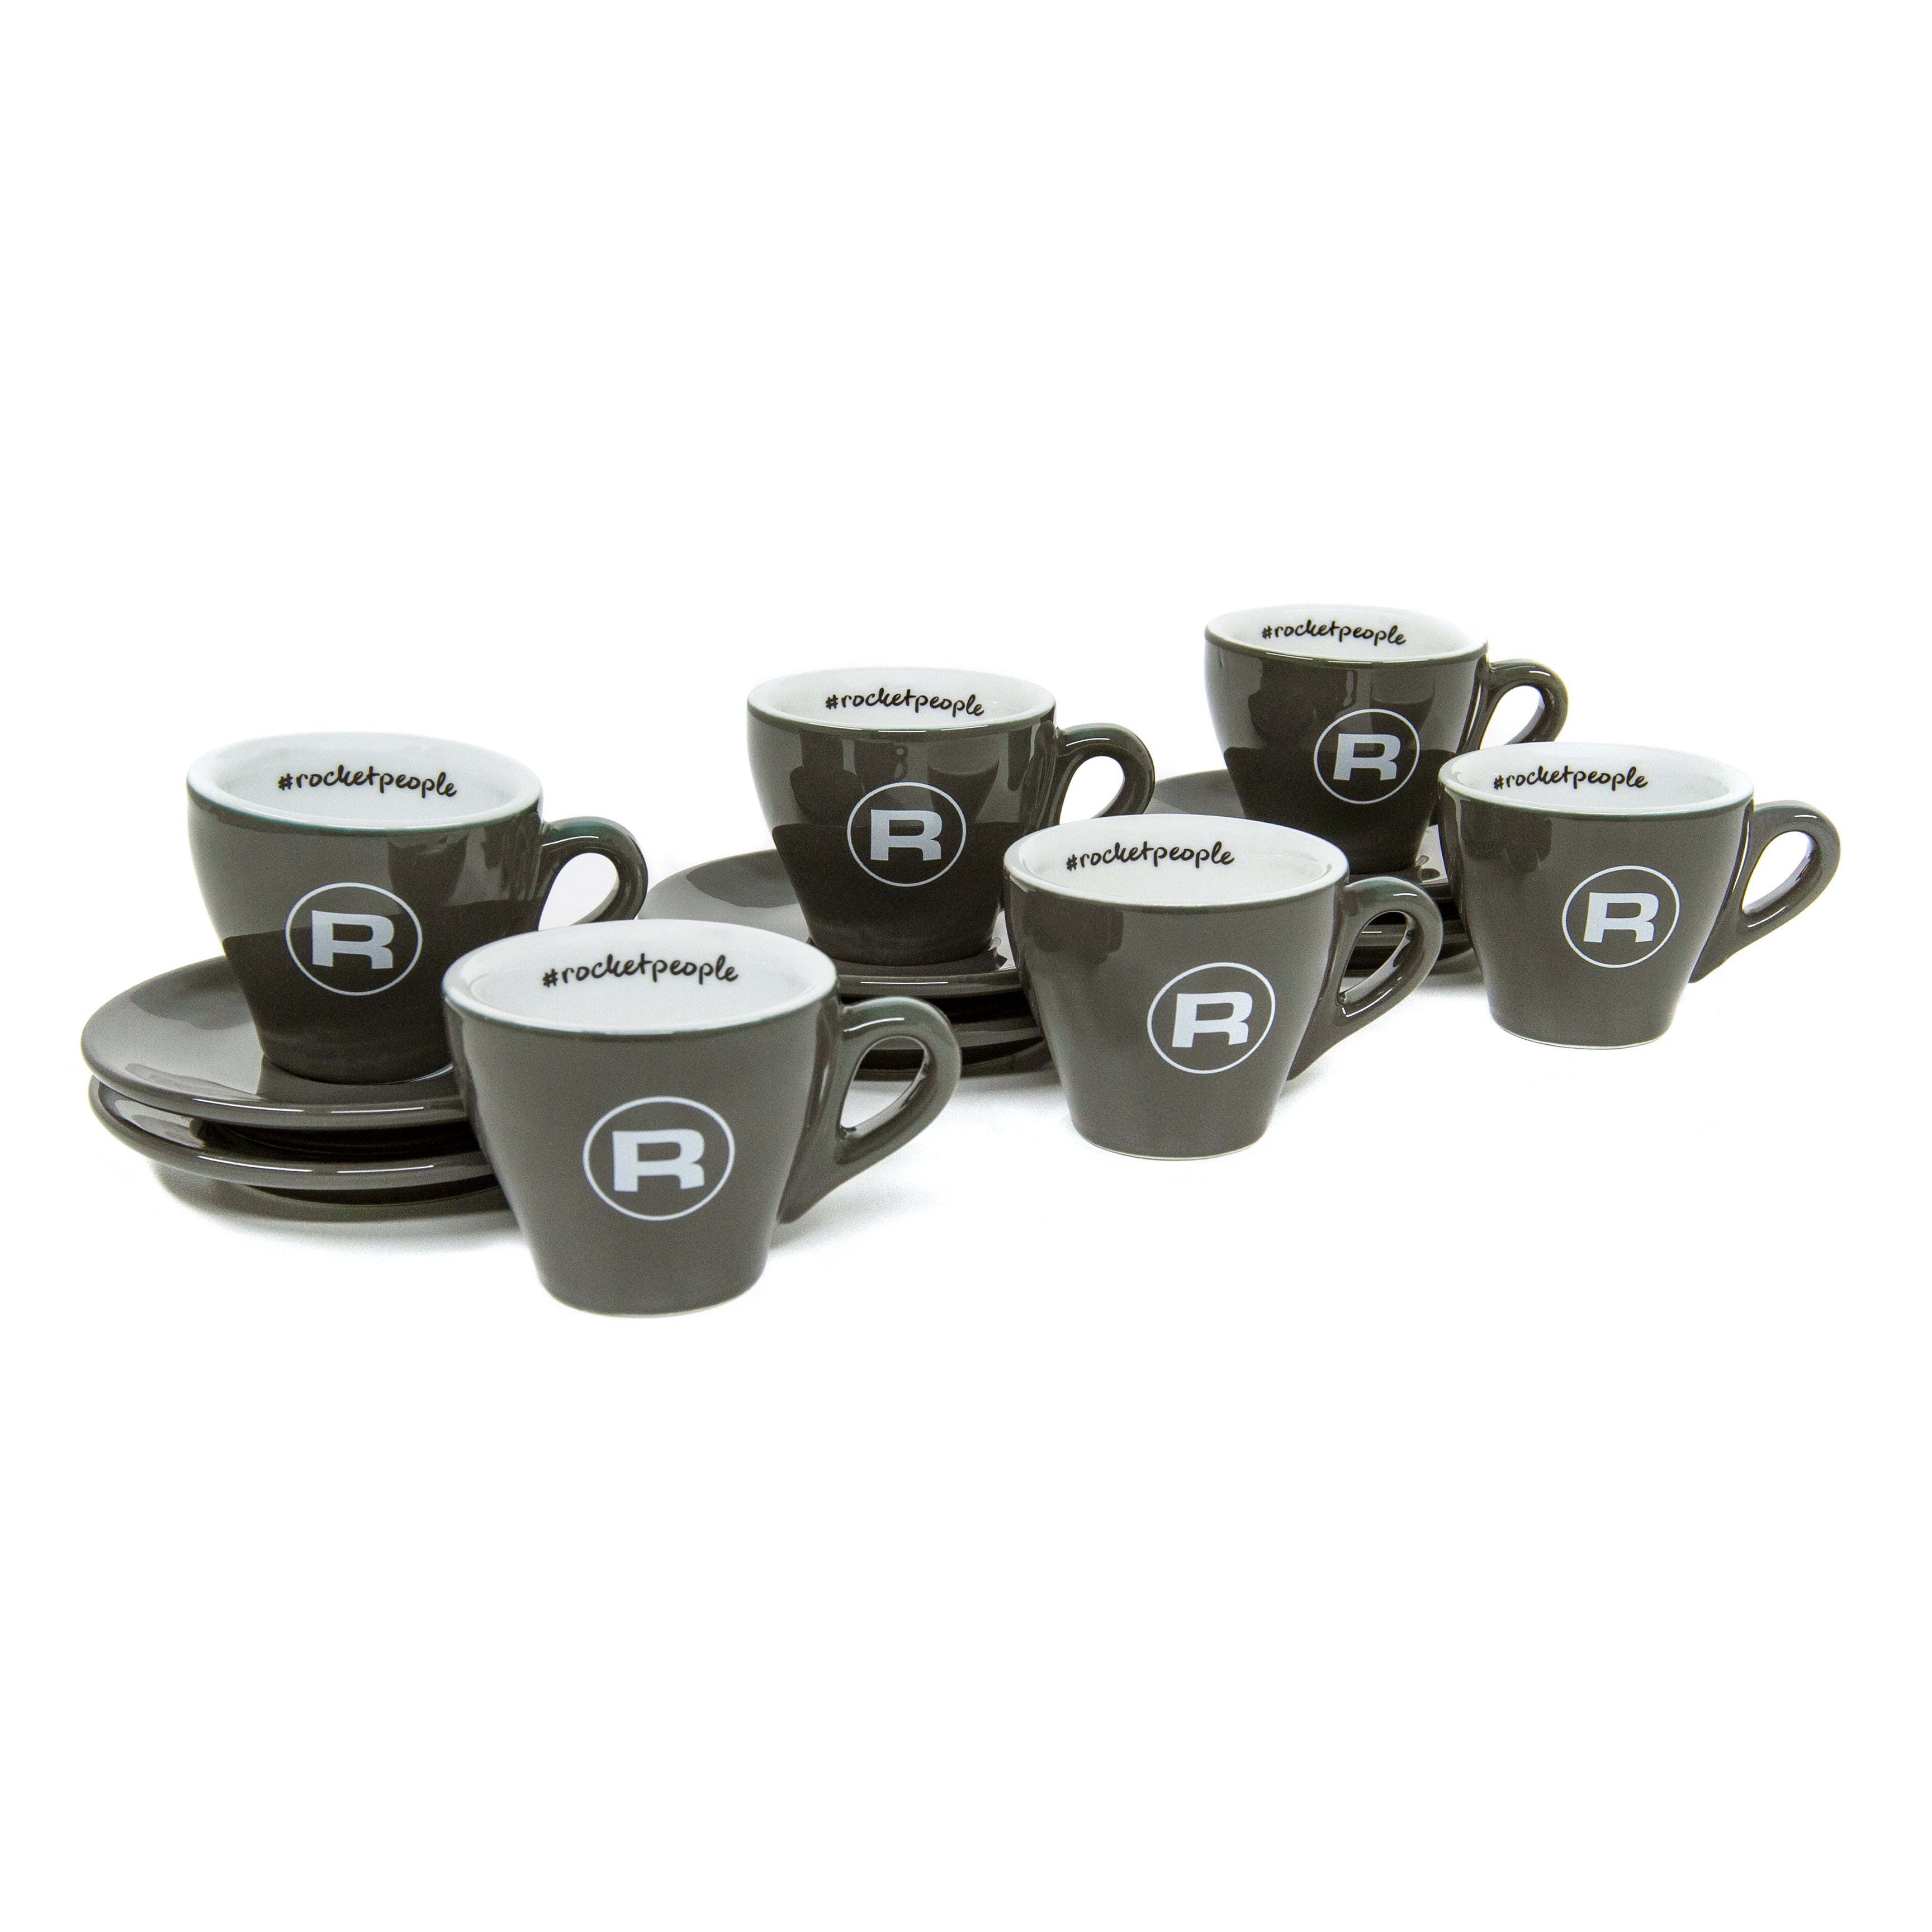 MENO Matt Black 90 ml Espresso Cup & Saucer - Barista Pro